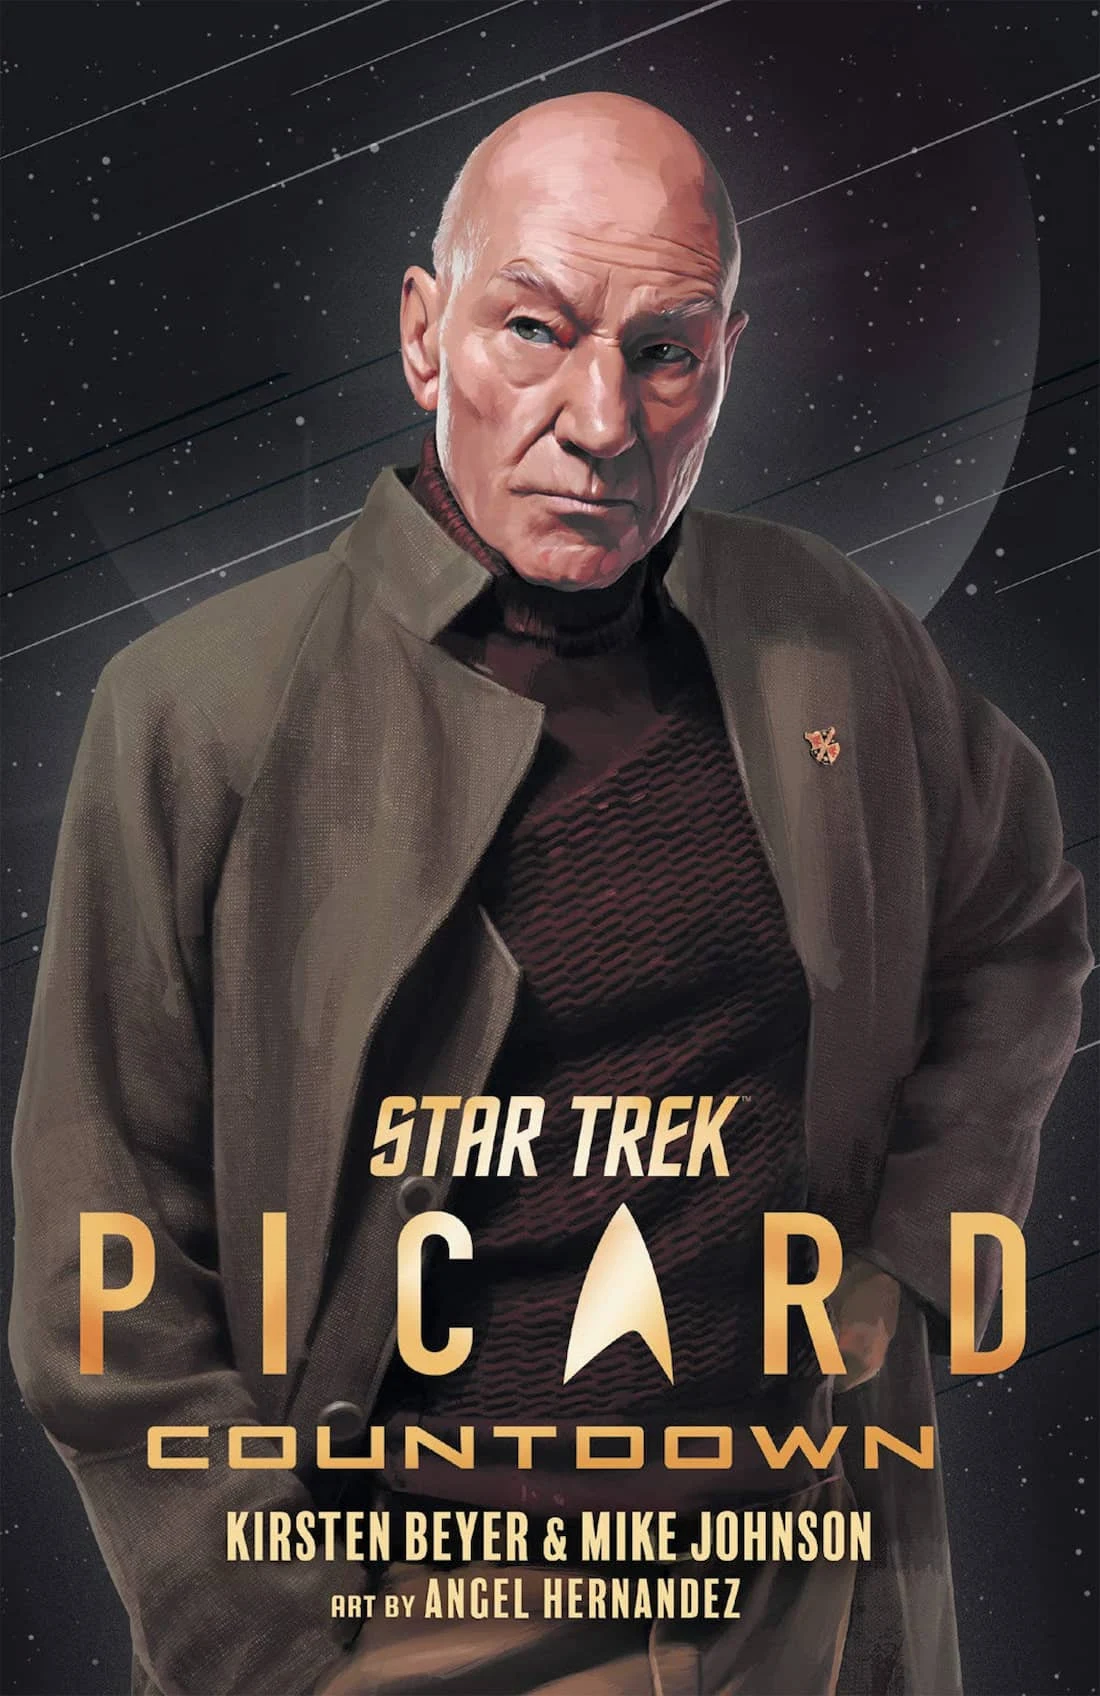 Star Trek Picard: Countdown